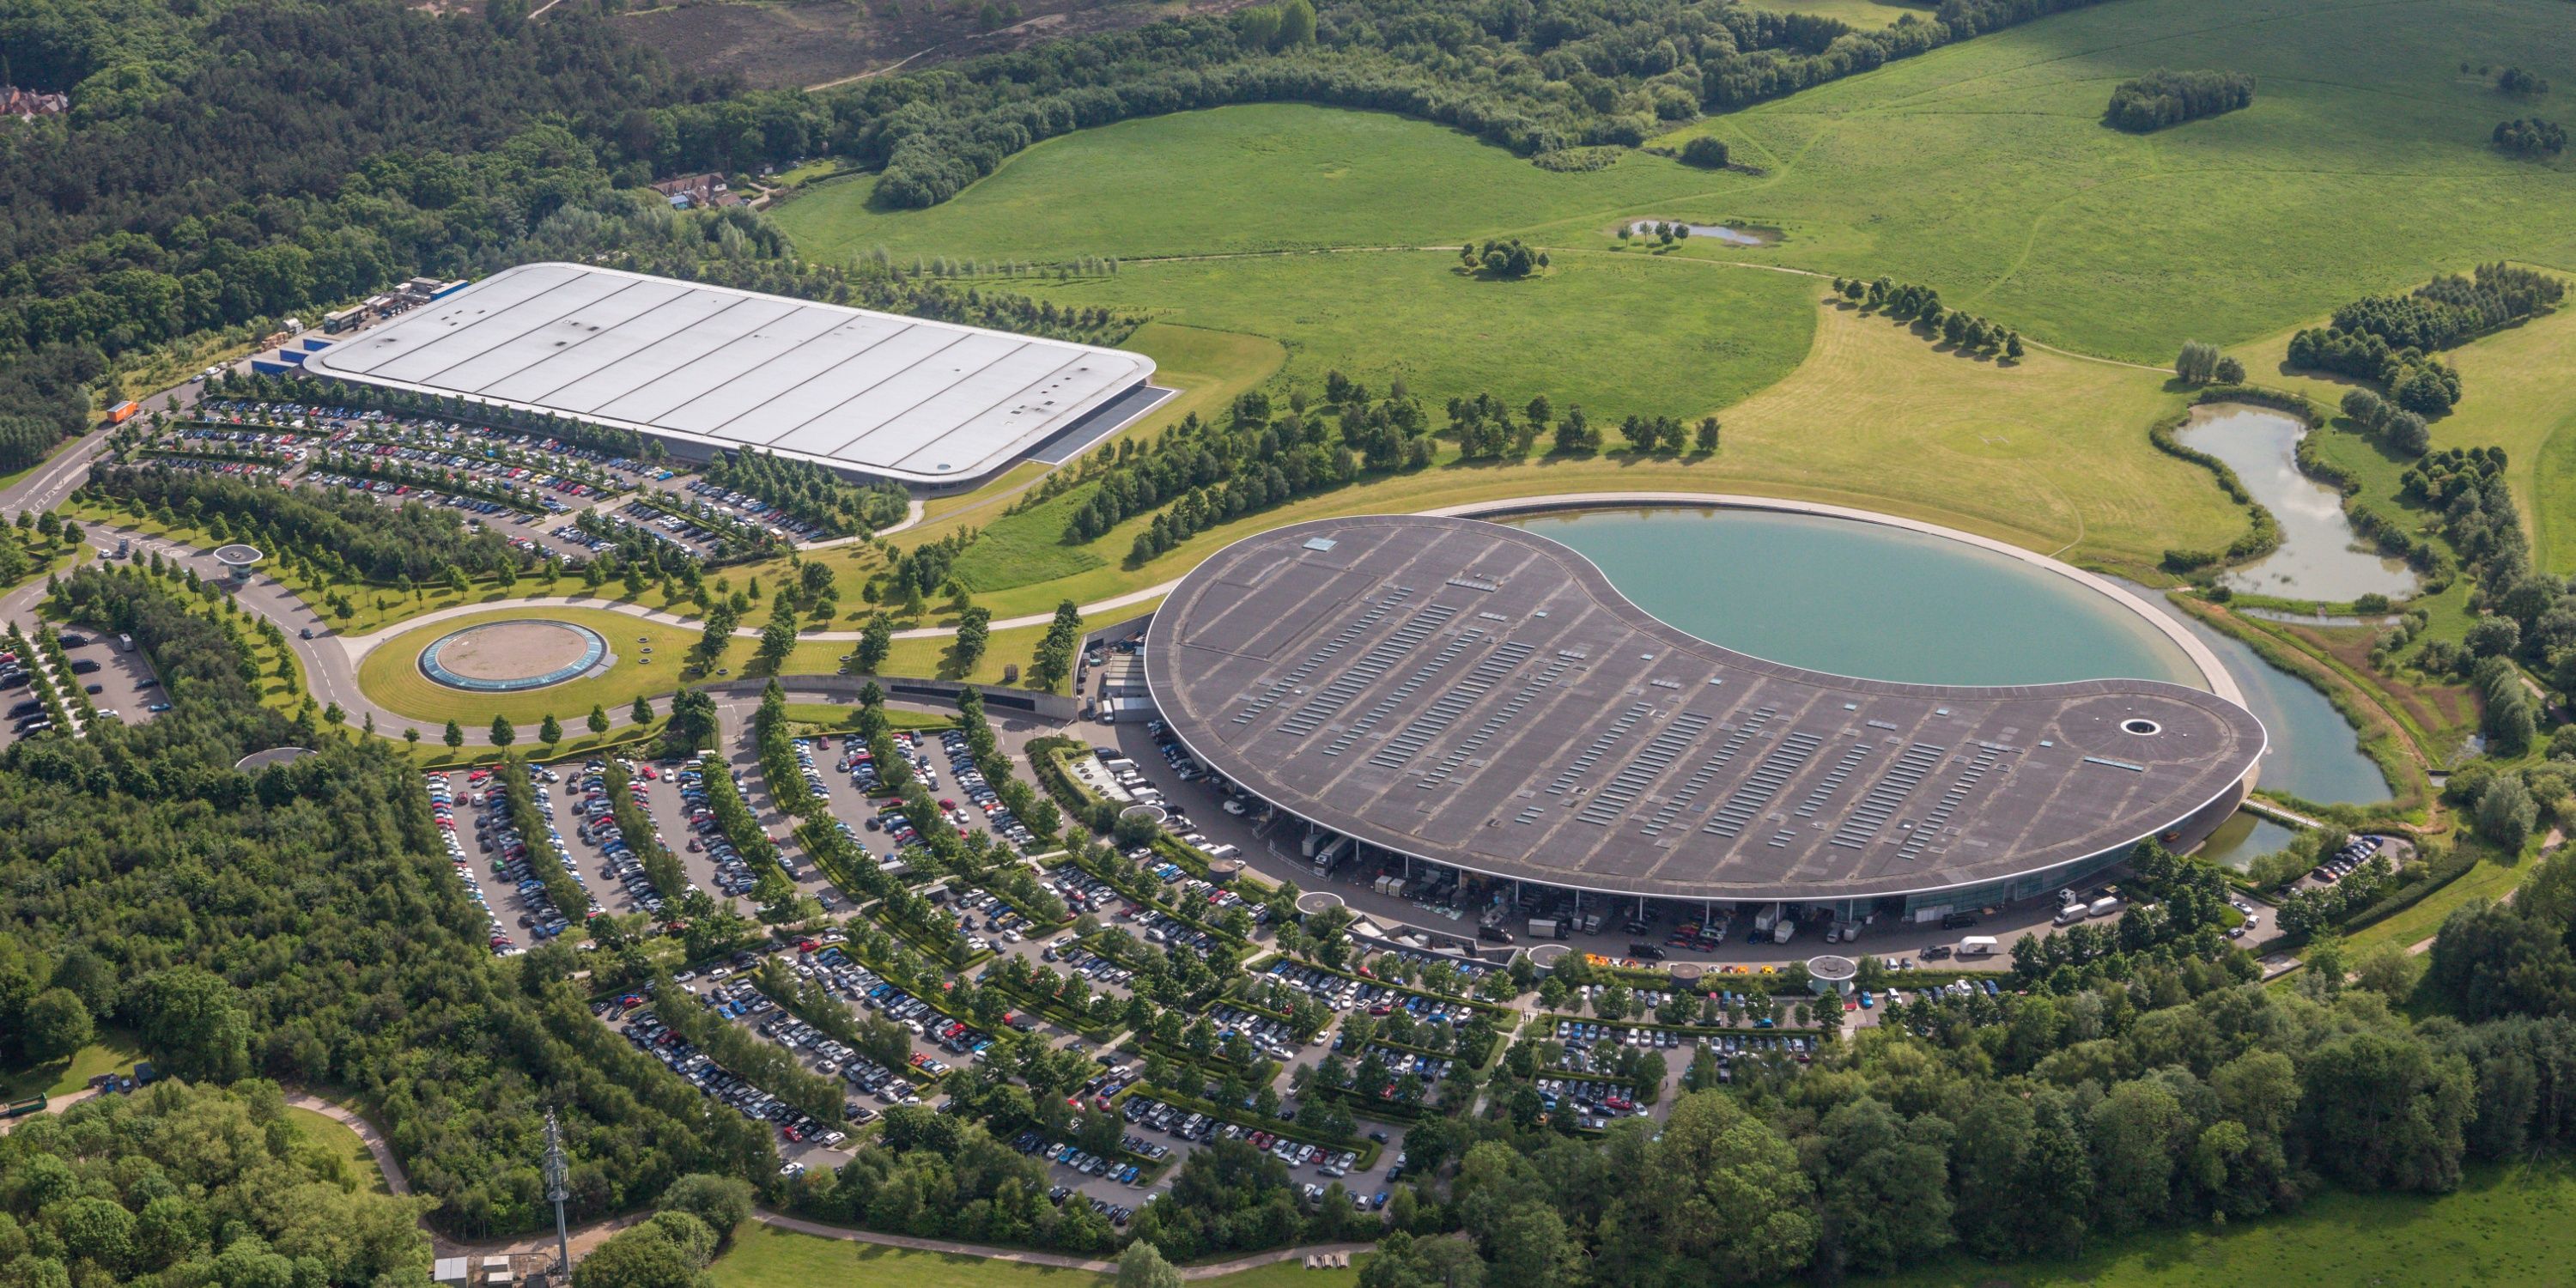 Aerial view of McLaren Technology Centre